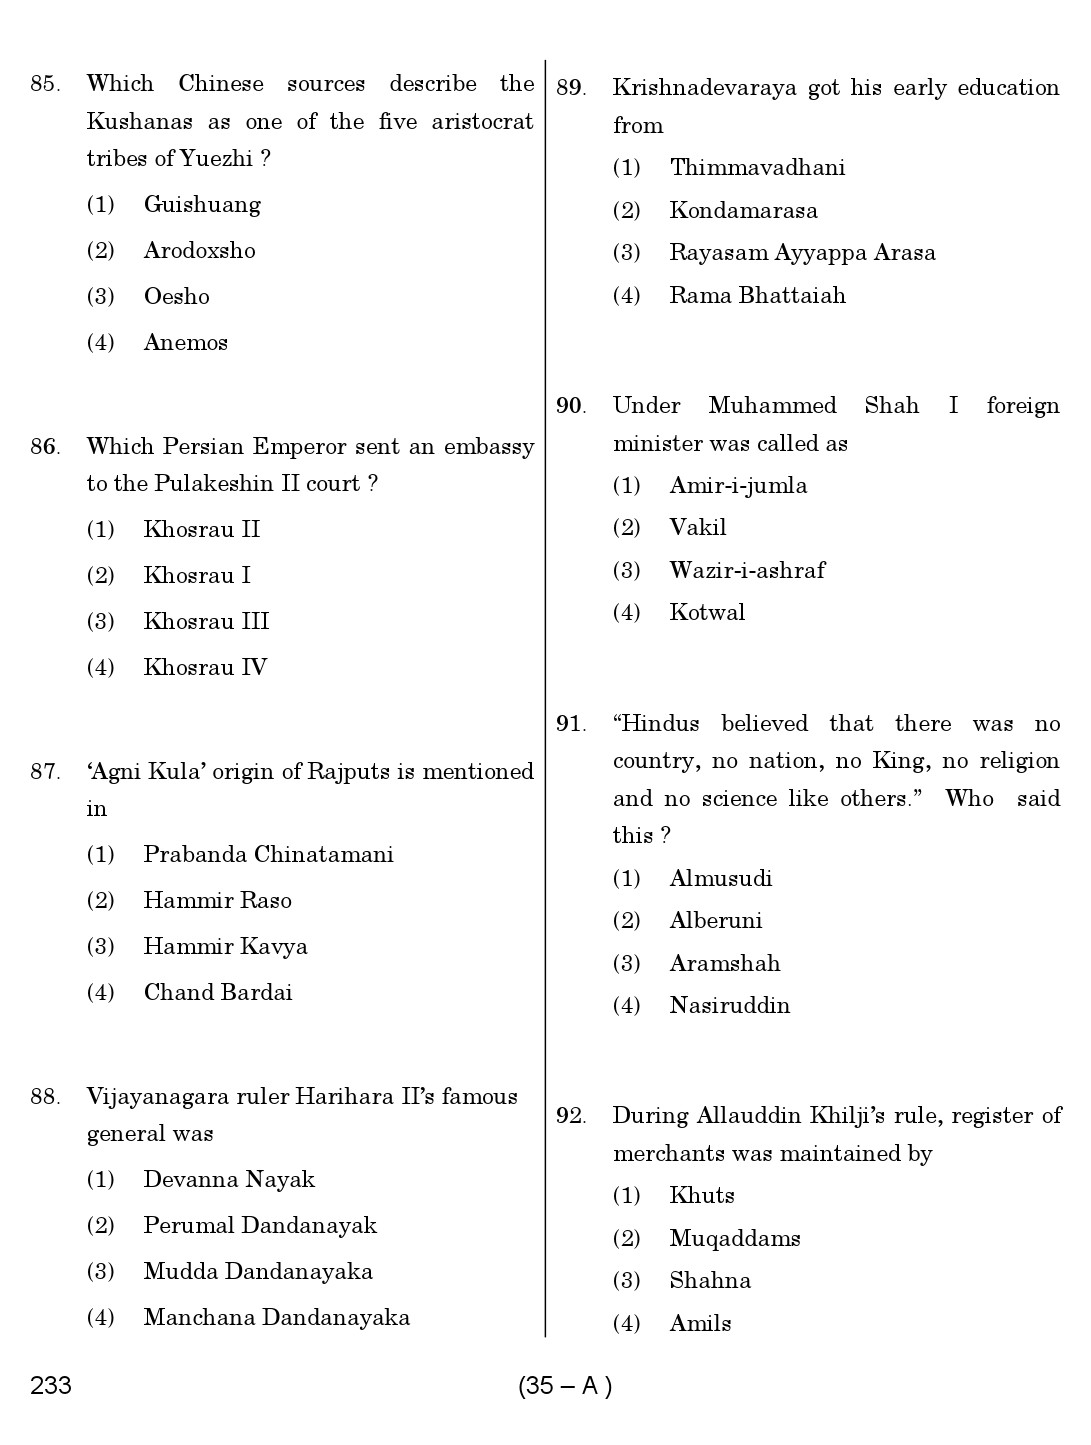 Karnataka PSC History Teacher Exam Sample Question Paper Subject code 233 35